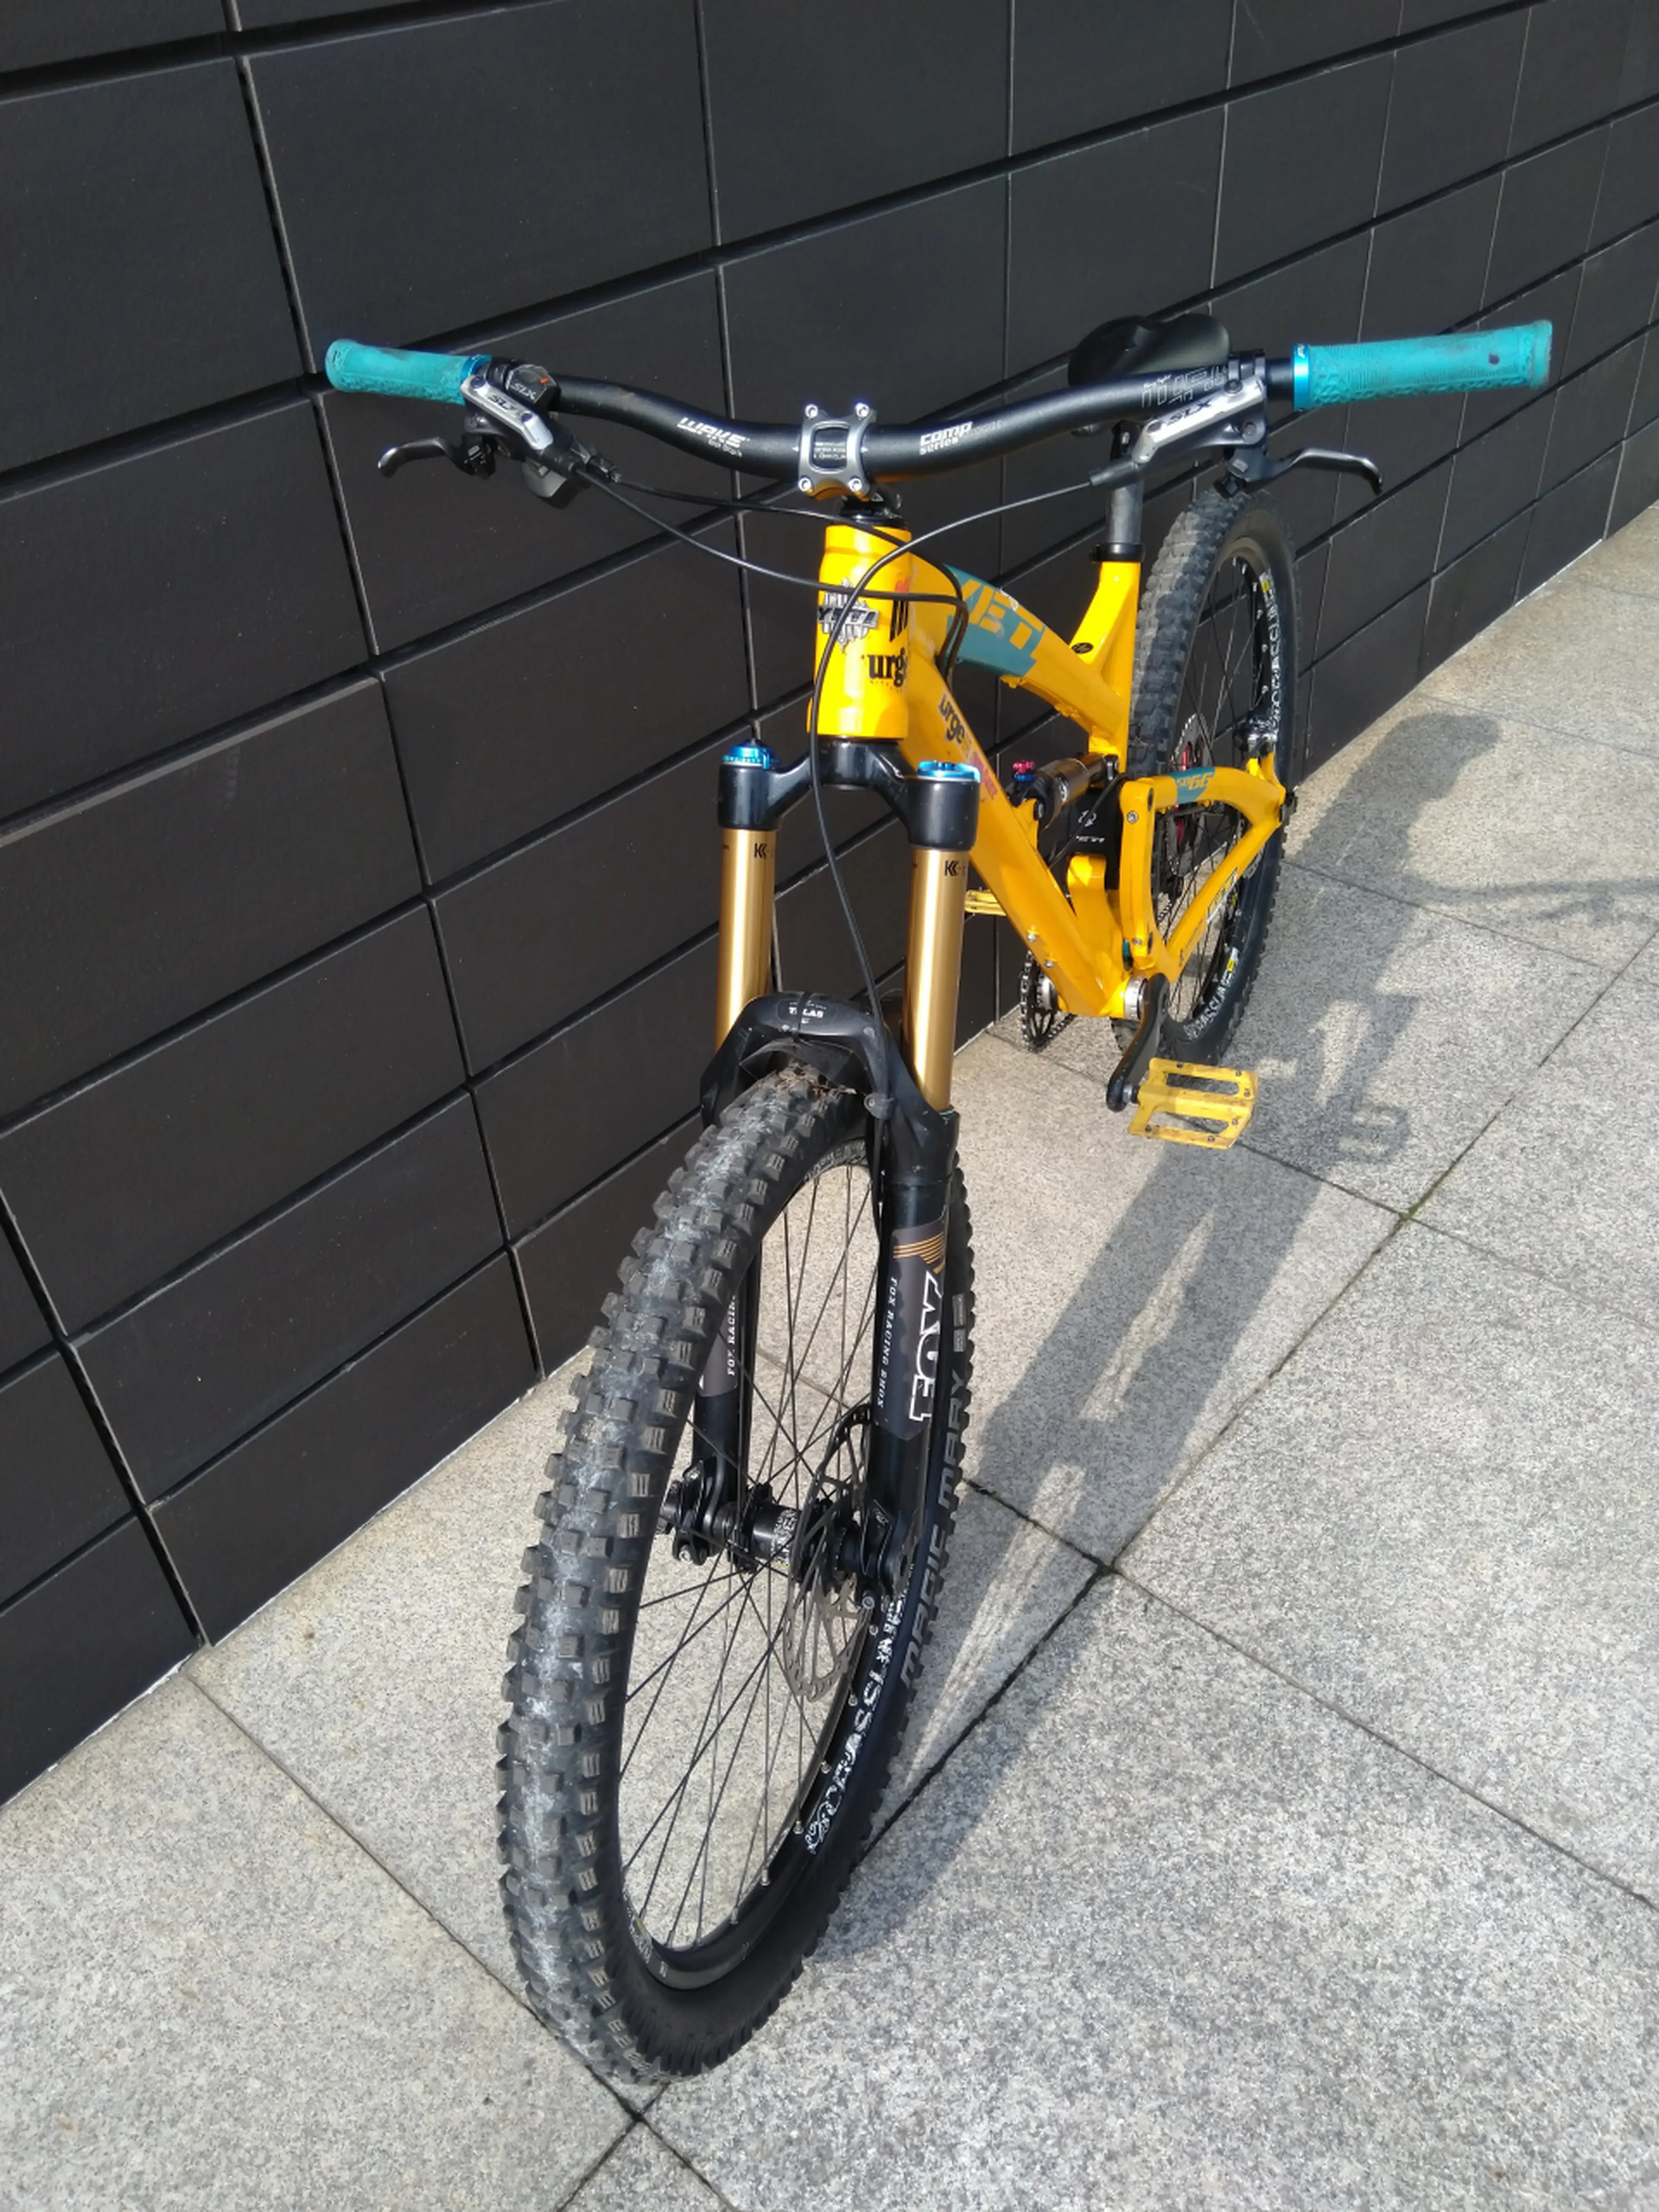 2. (Vândută) Bicicletă Yeti SB66, mărime S, roți 26", an 2014